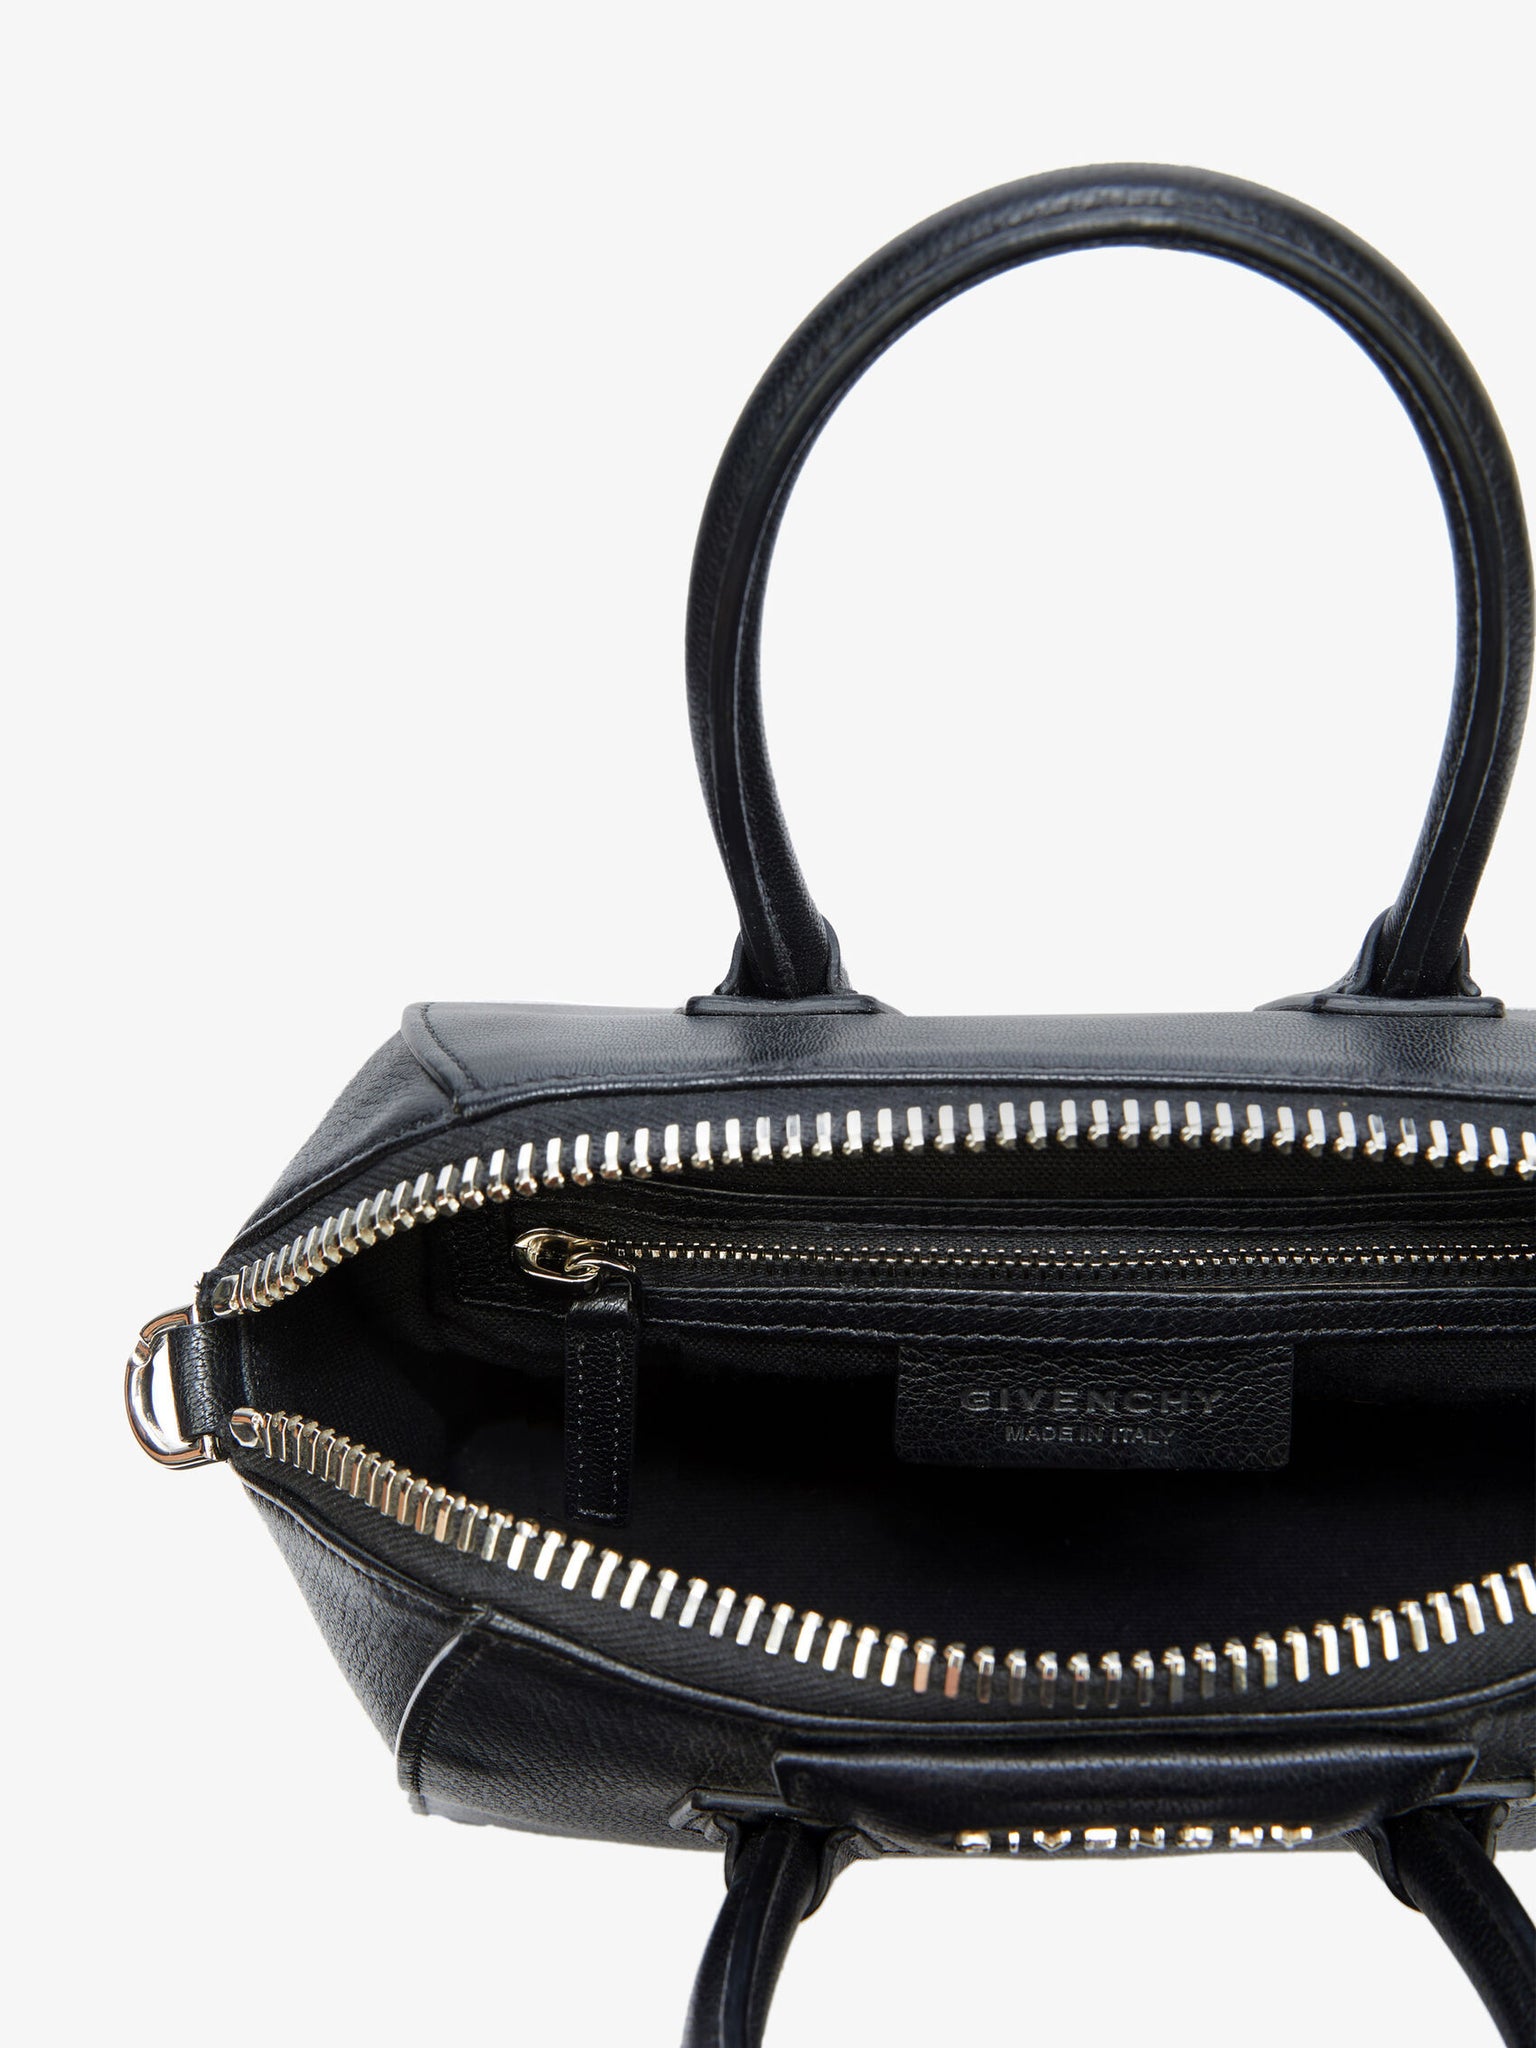 Givenchy Antigona Mini Bag in Grained Leather